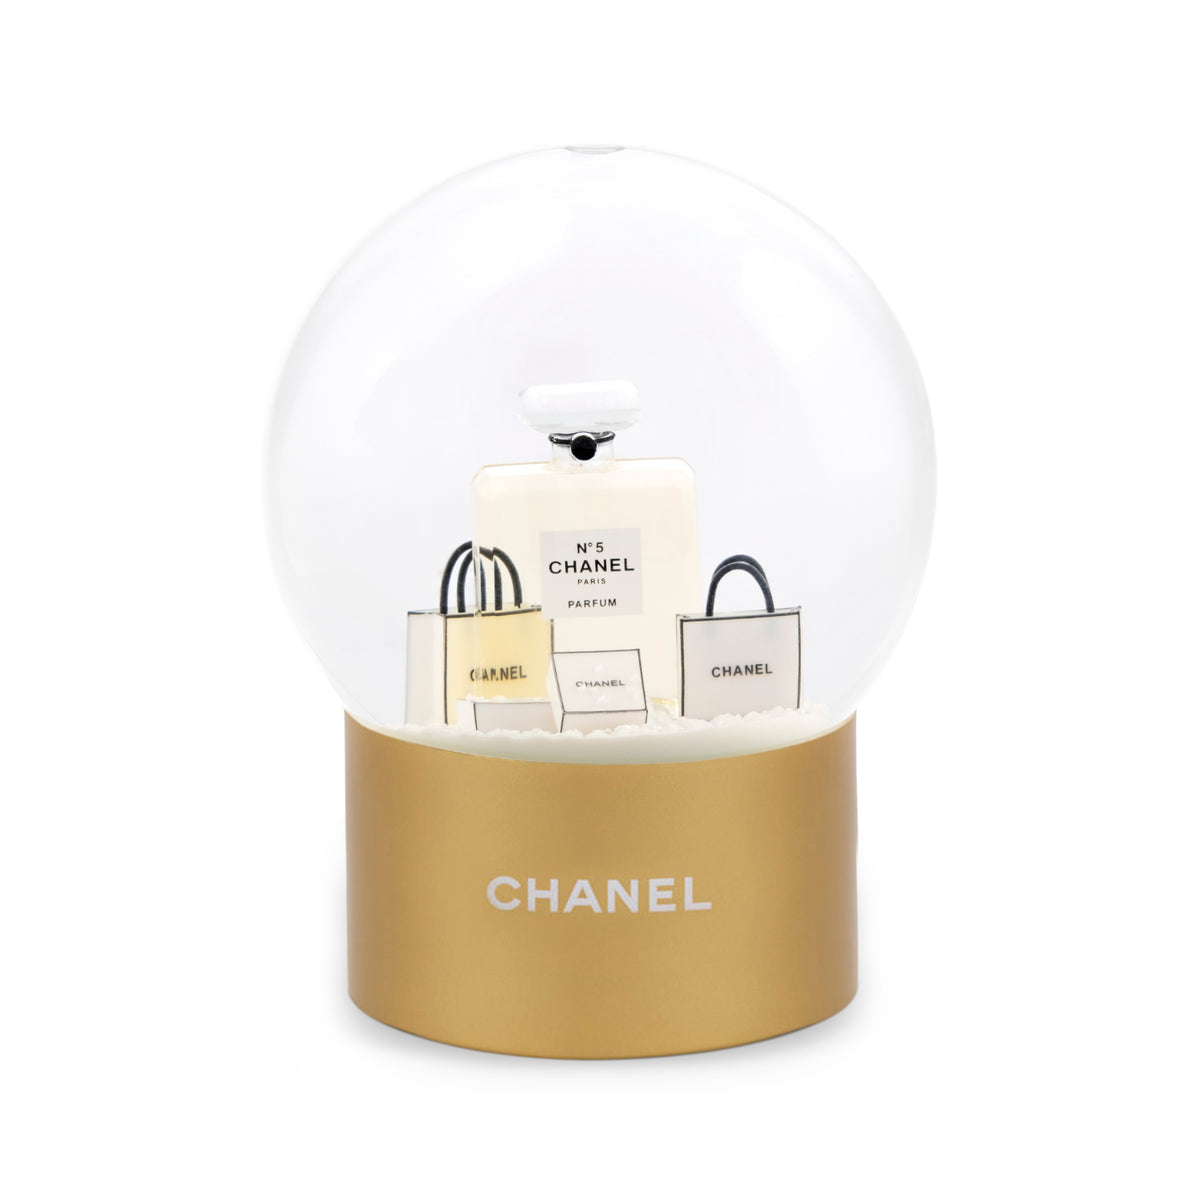 Chanel N°5 Perfume &amp; Bags Snow Globe